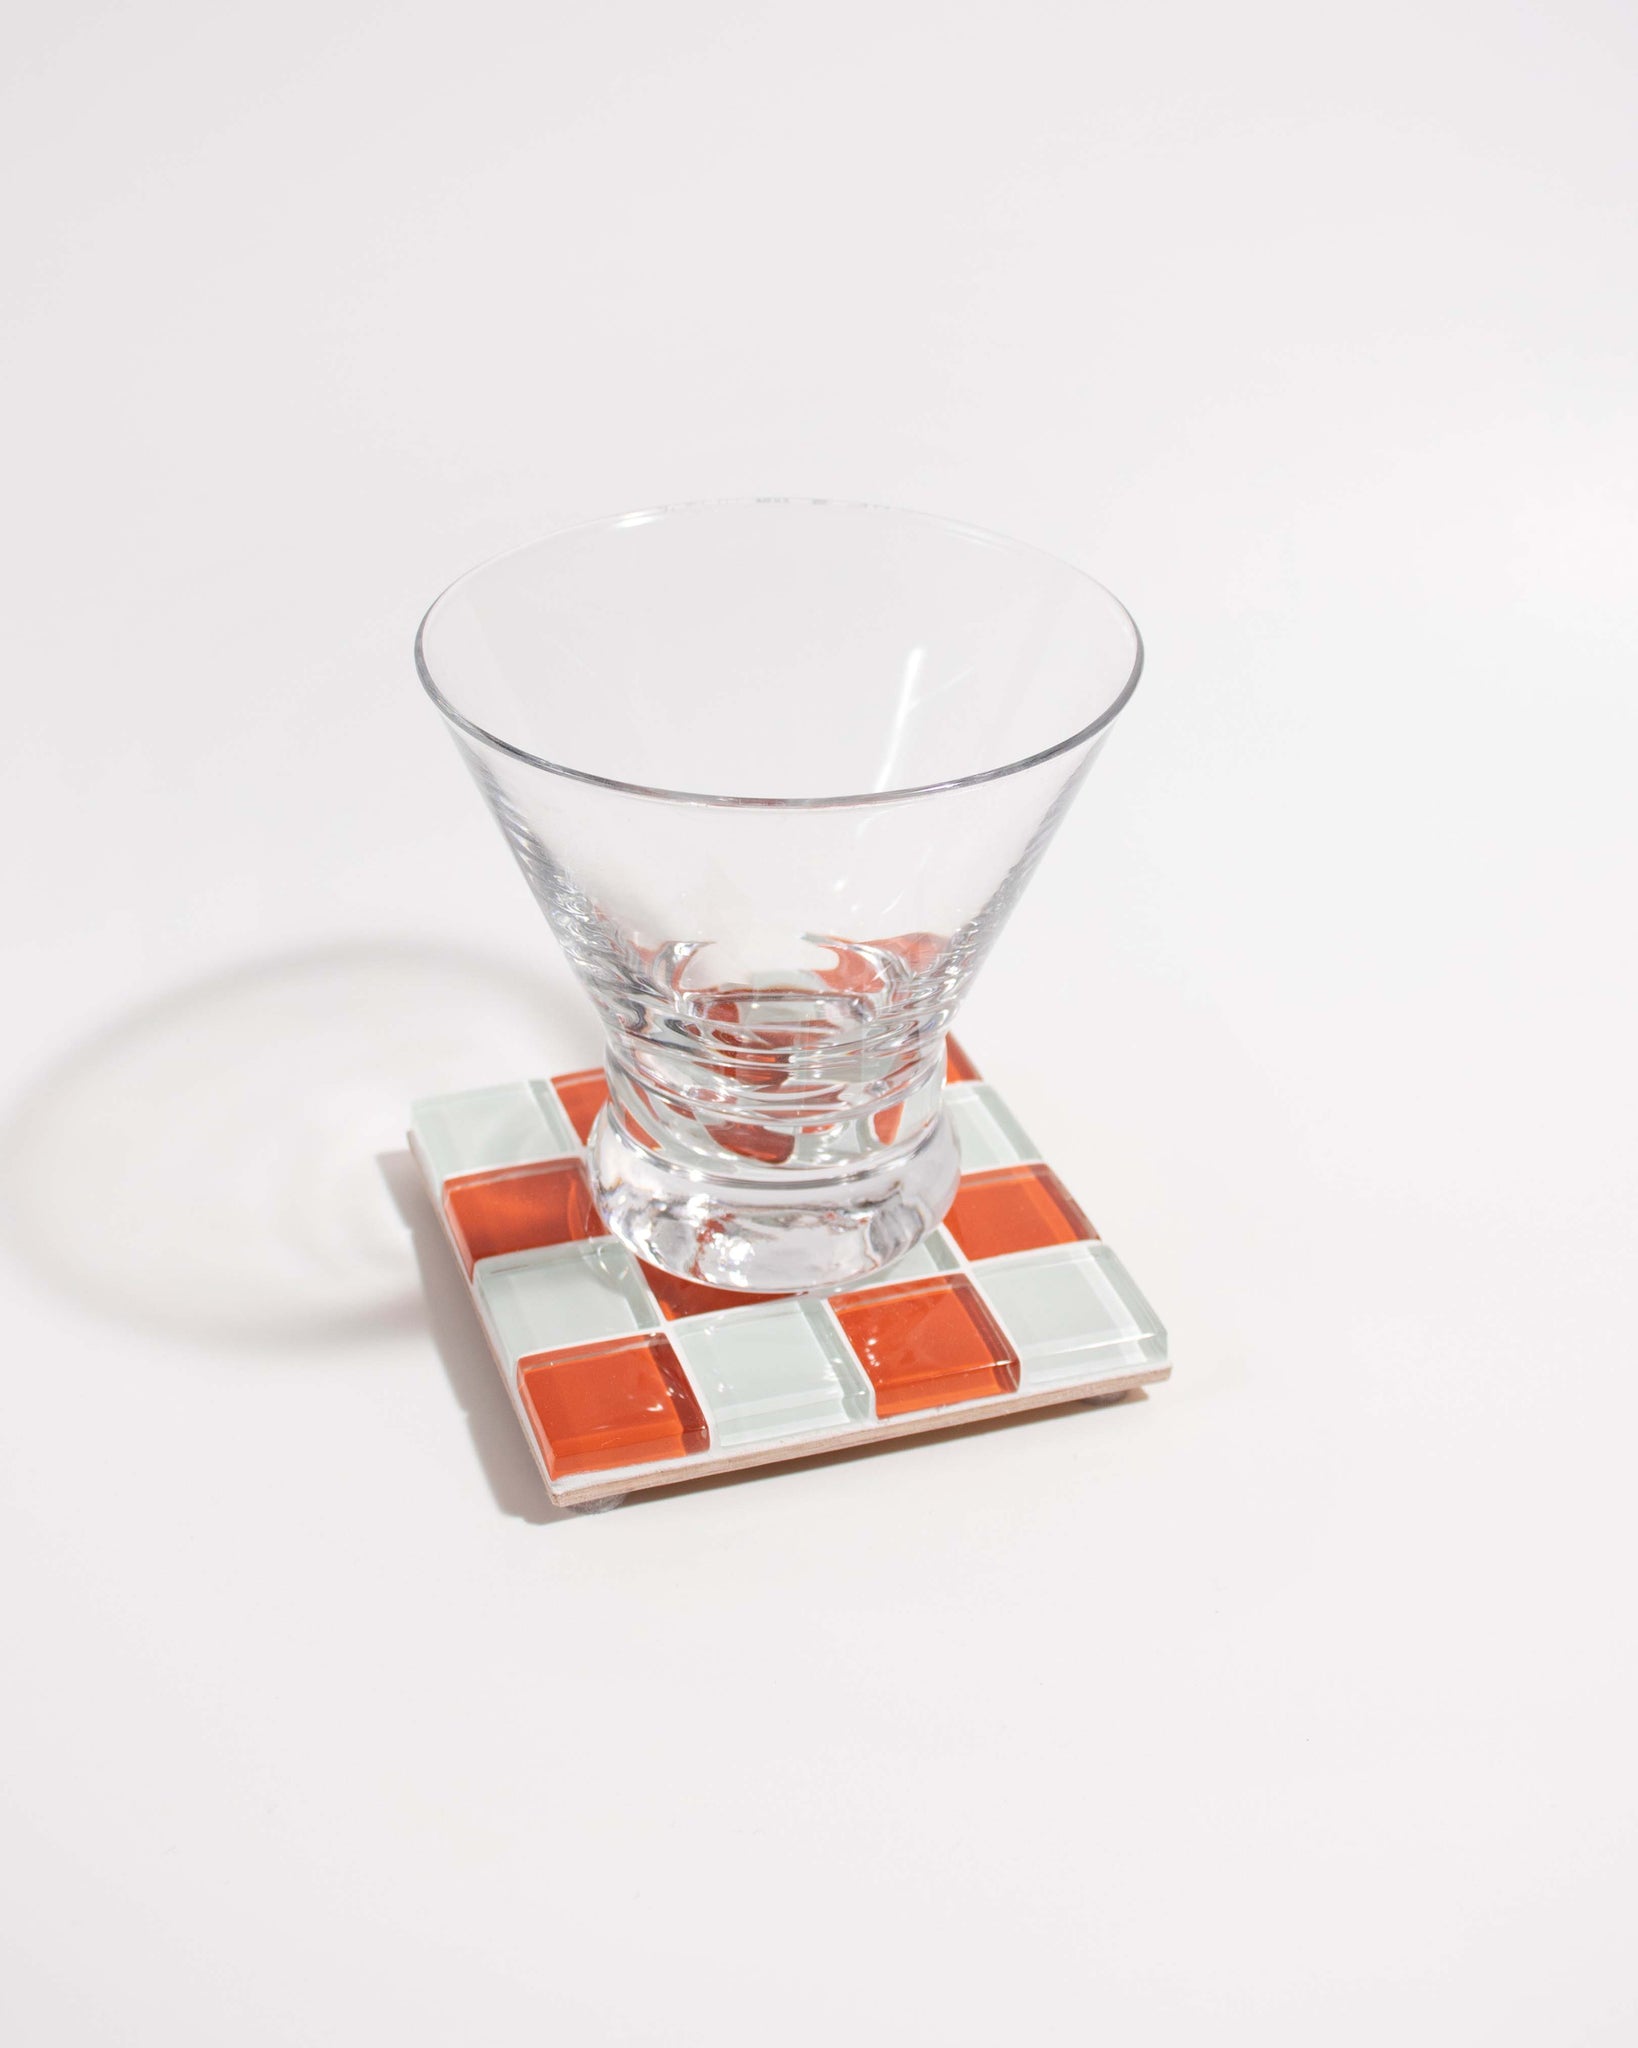 GLASS TILE COASTER - Pumpkin Spice Latte